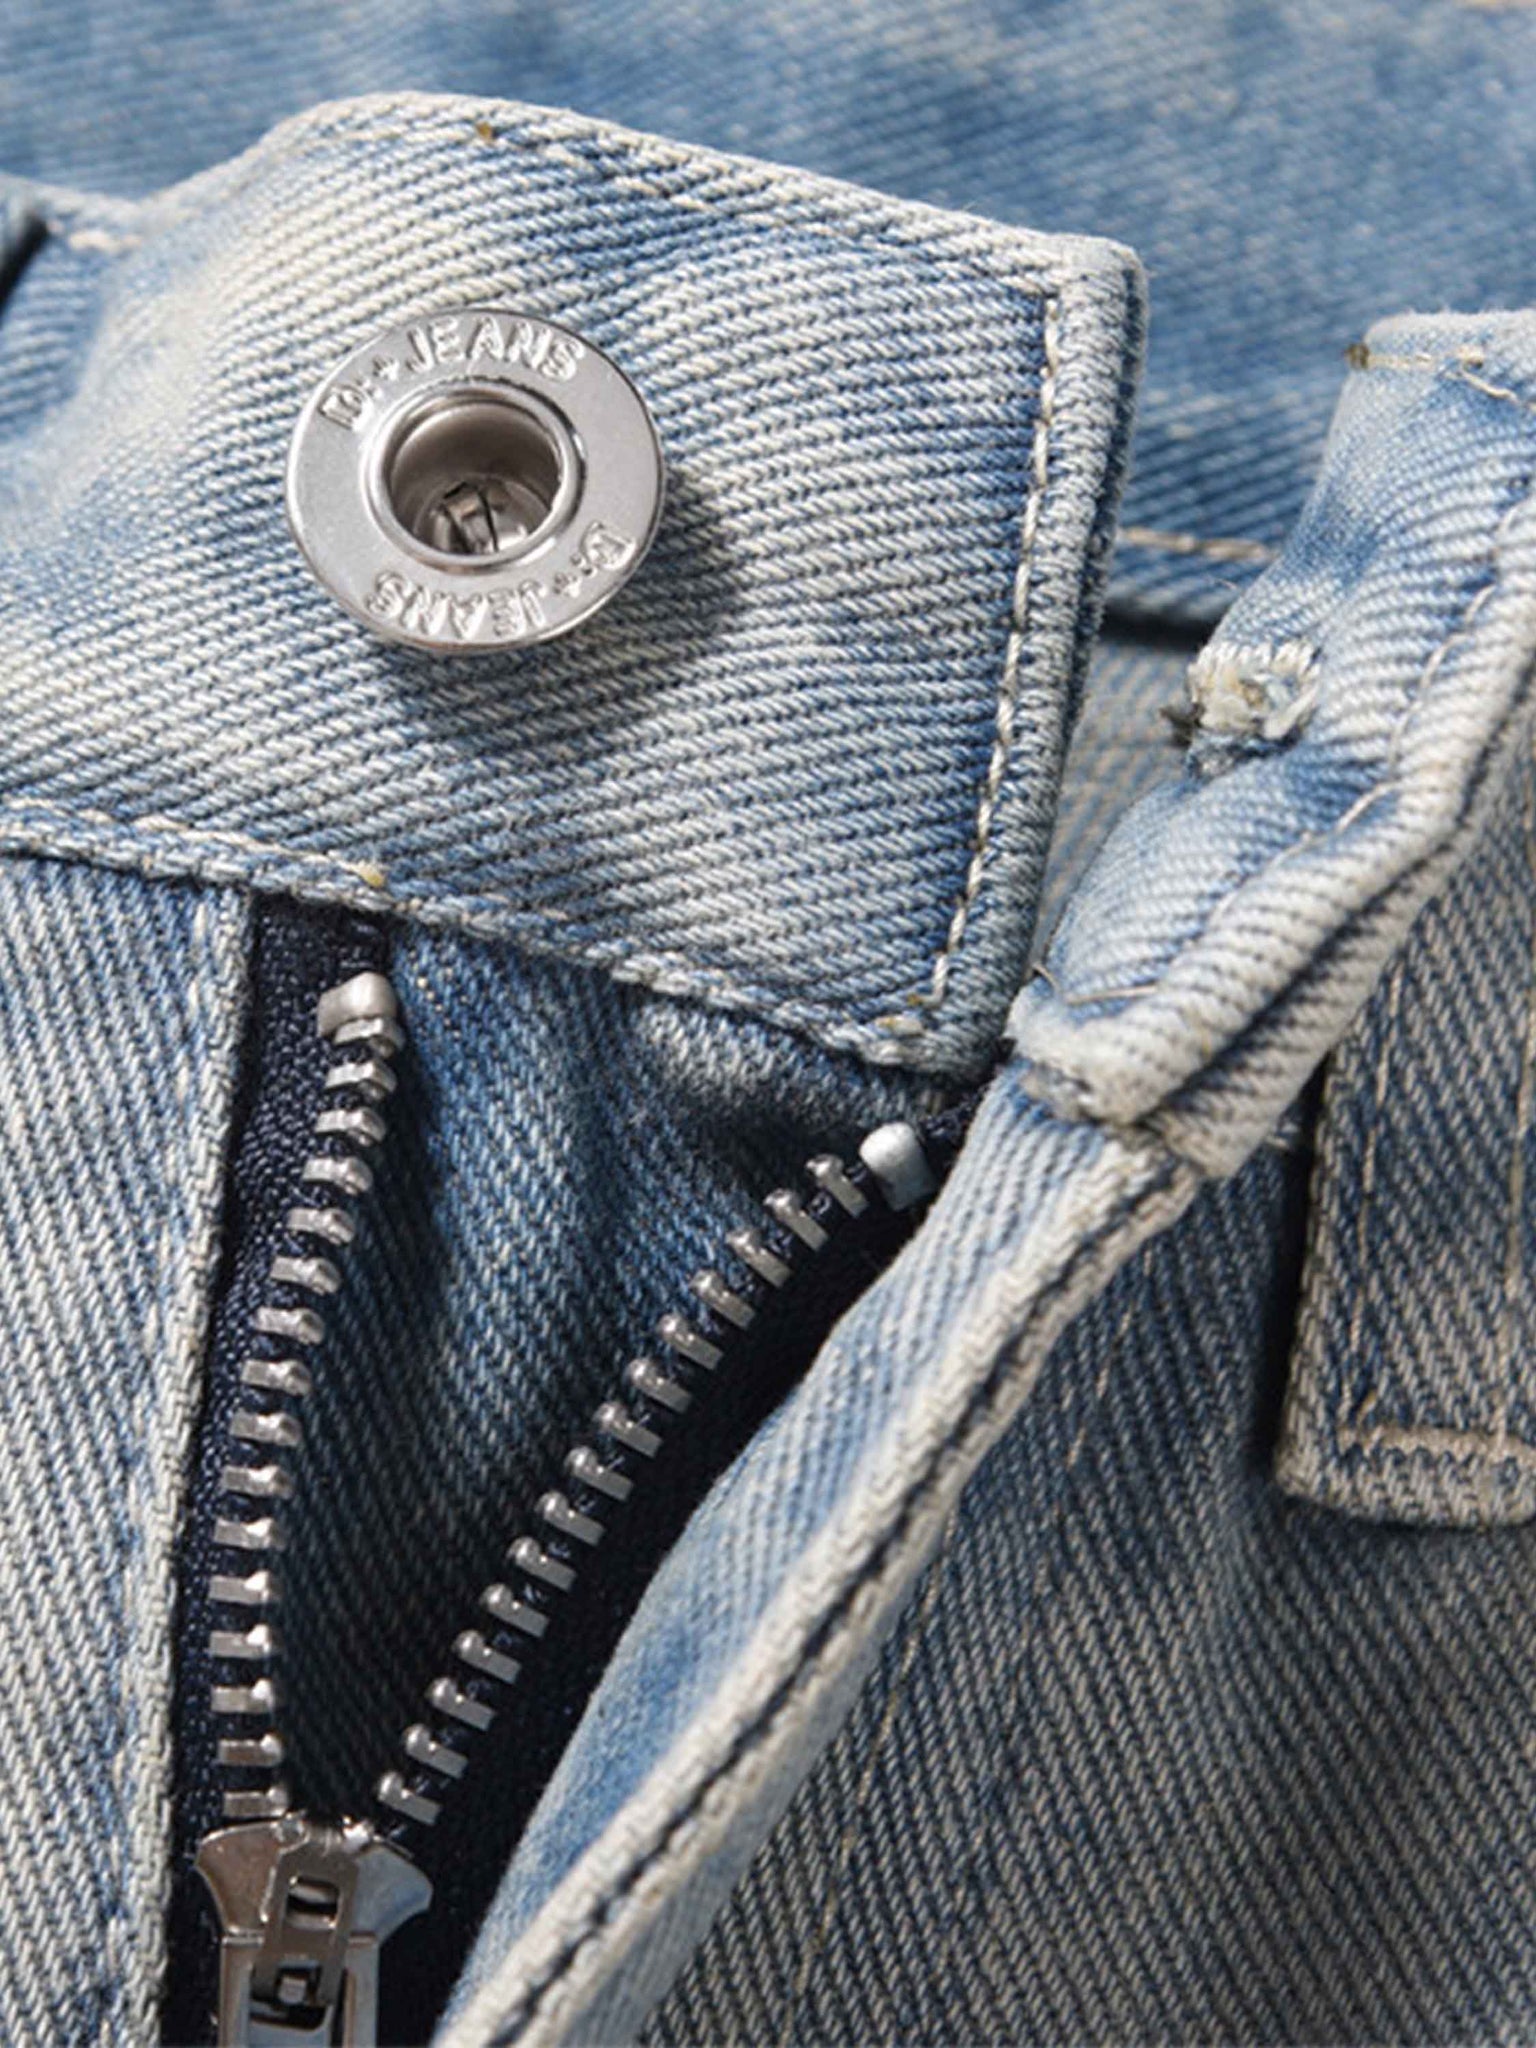 The Supermade High Street Hip-hop Design Sense Zipper Straight Jeans Nine-point Pants